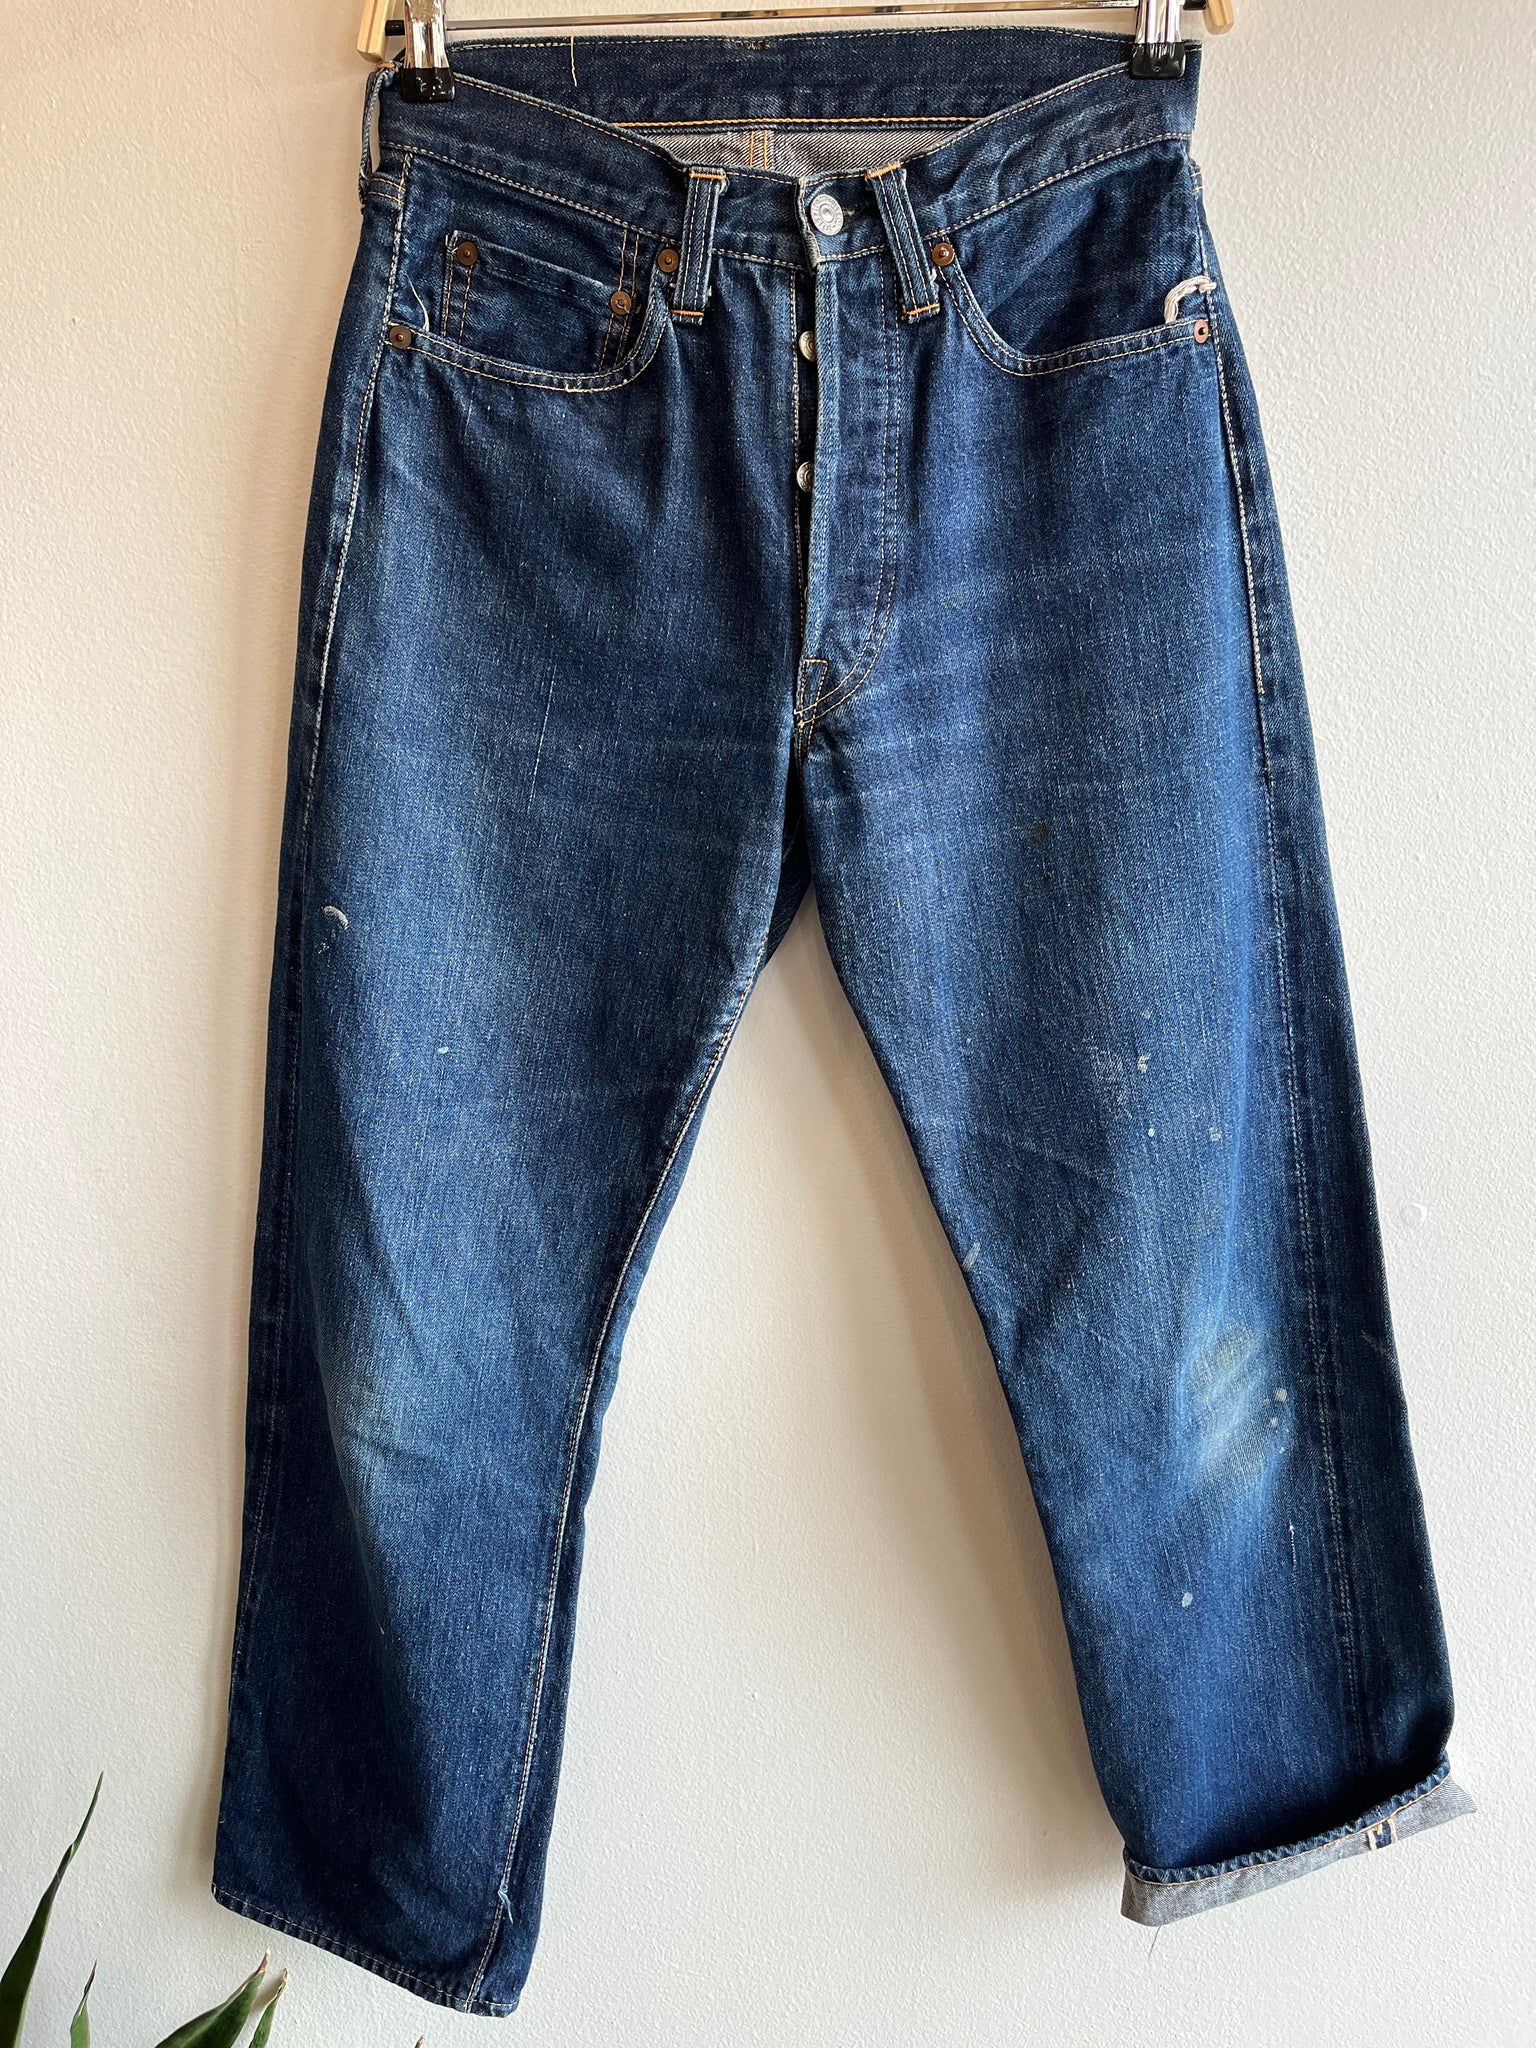 Vintage 1947 Levi’s 503B Selvedge Denim Jeans